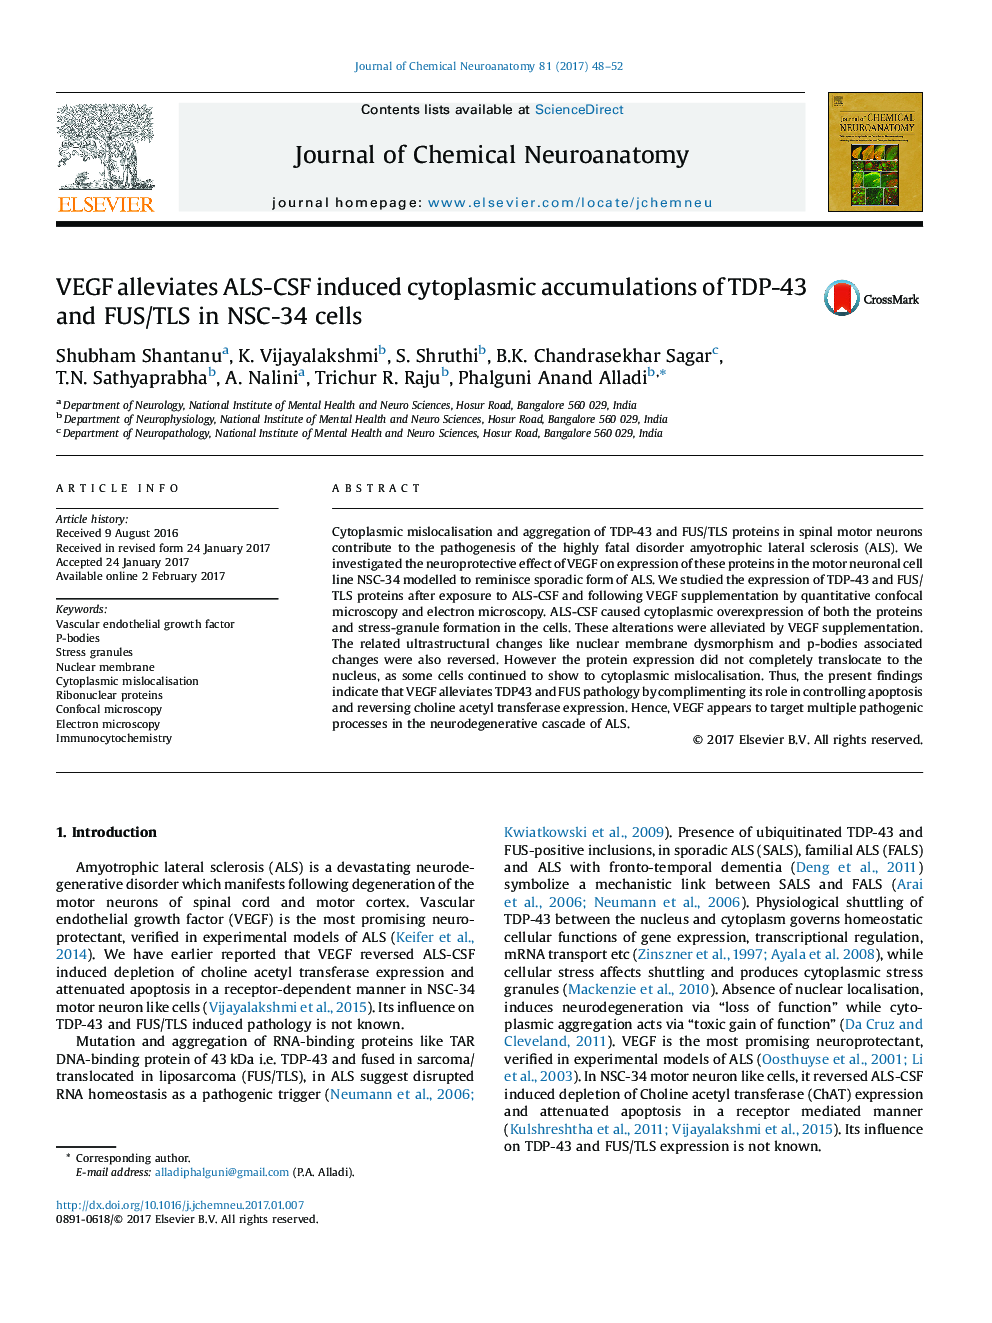 VEGF alleviates ALS-CSF induced cytoplasmic accumulations of TDP-43 and FUS/TLS in NSC-34 cells